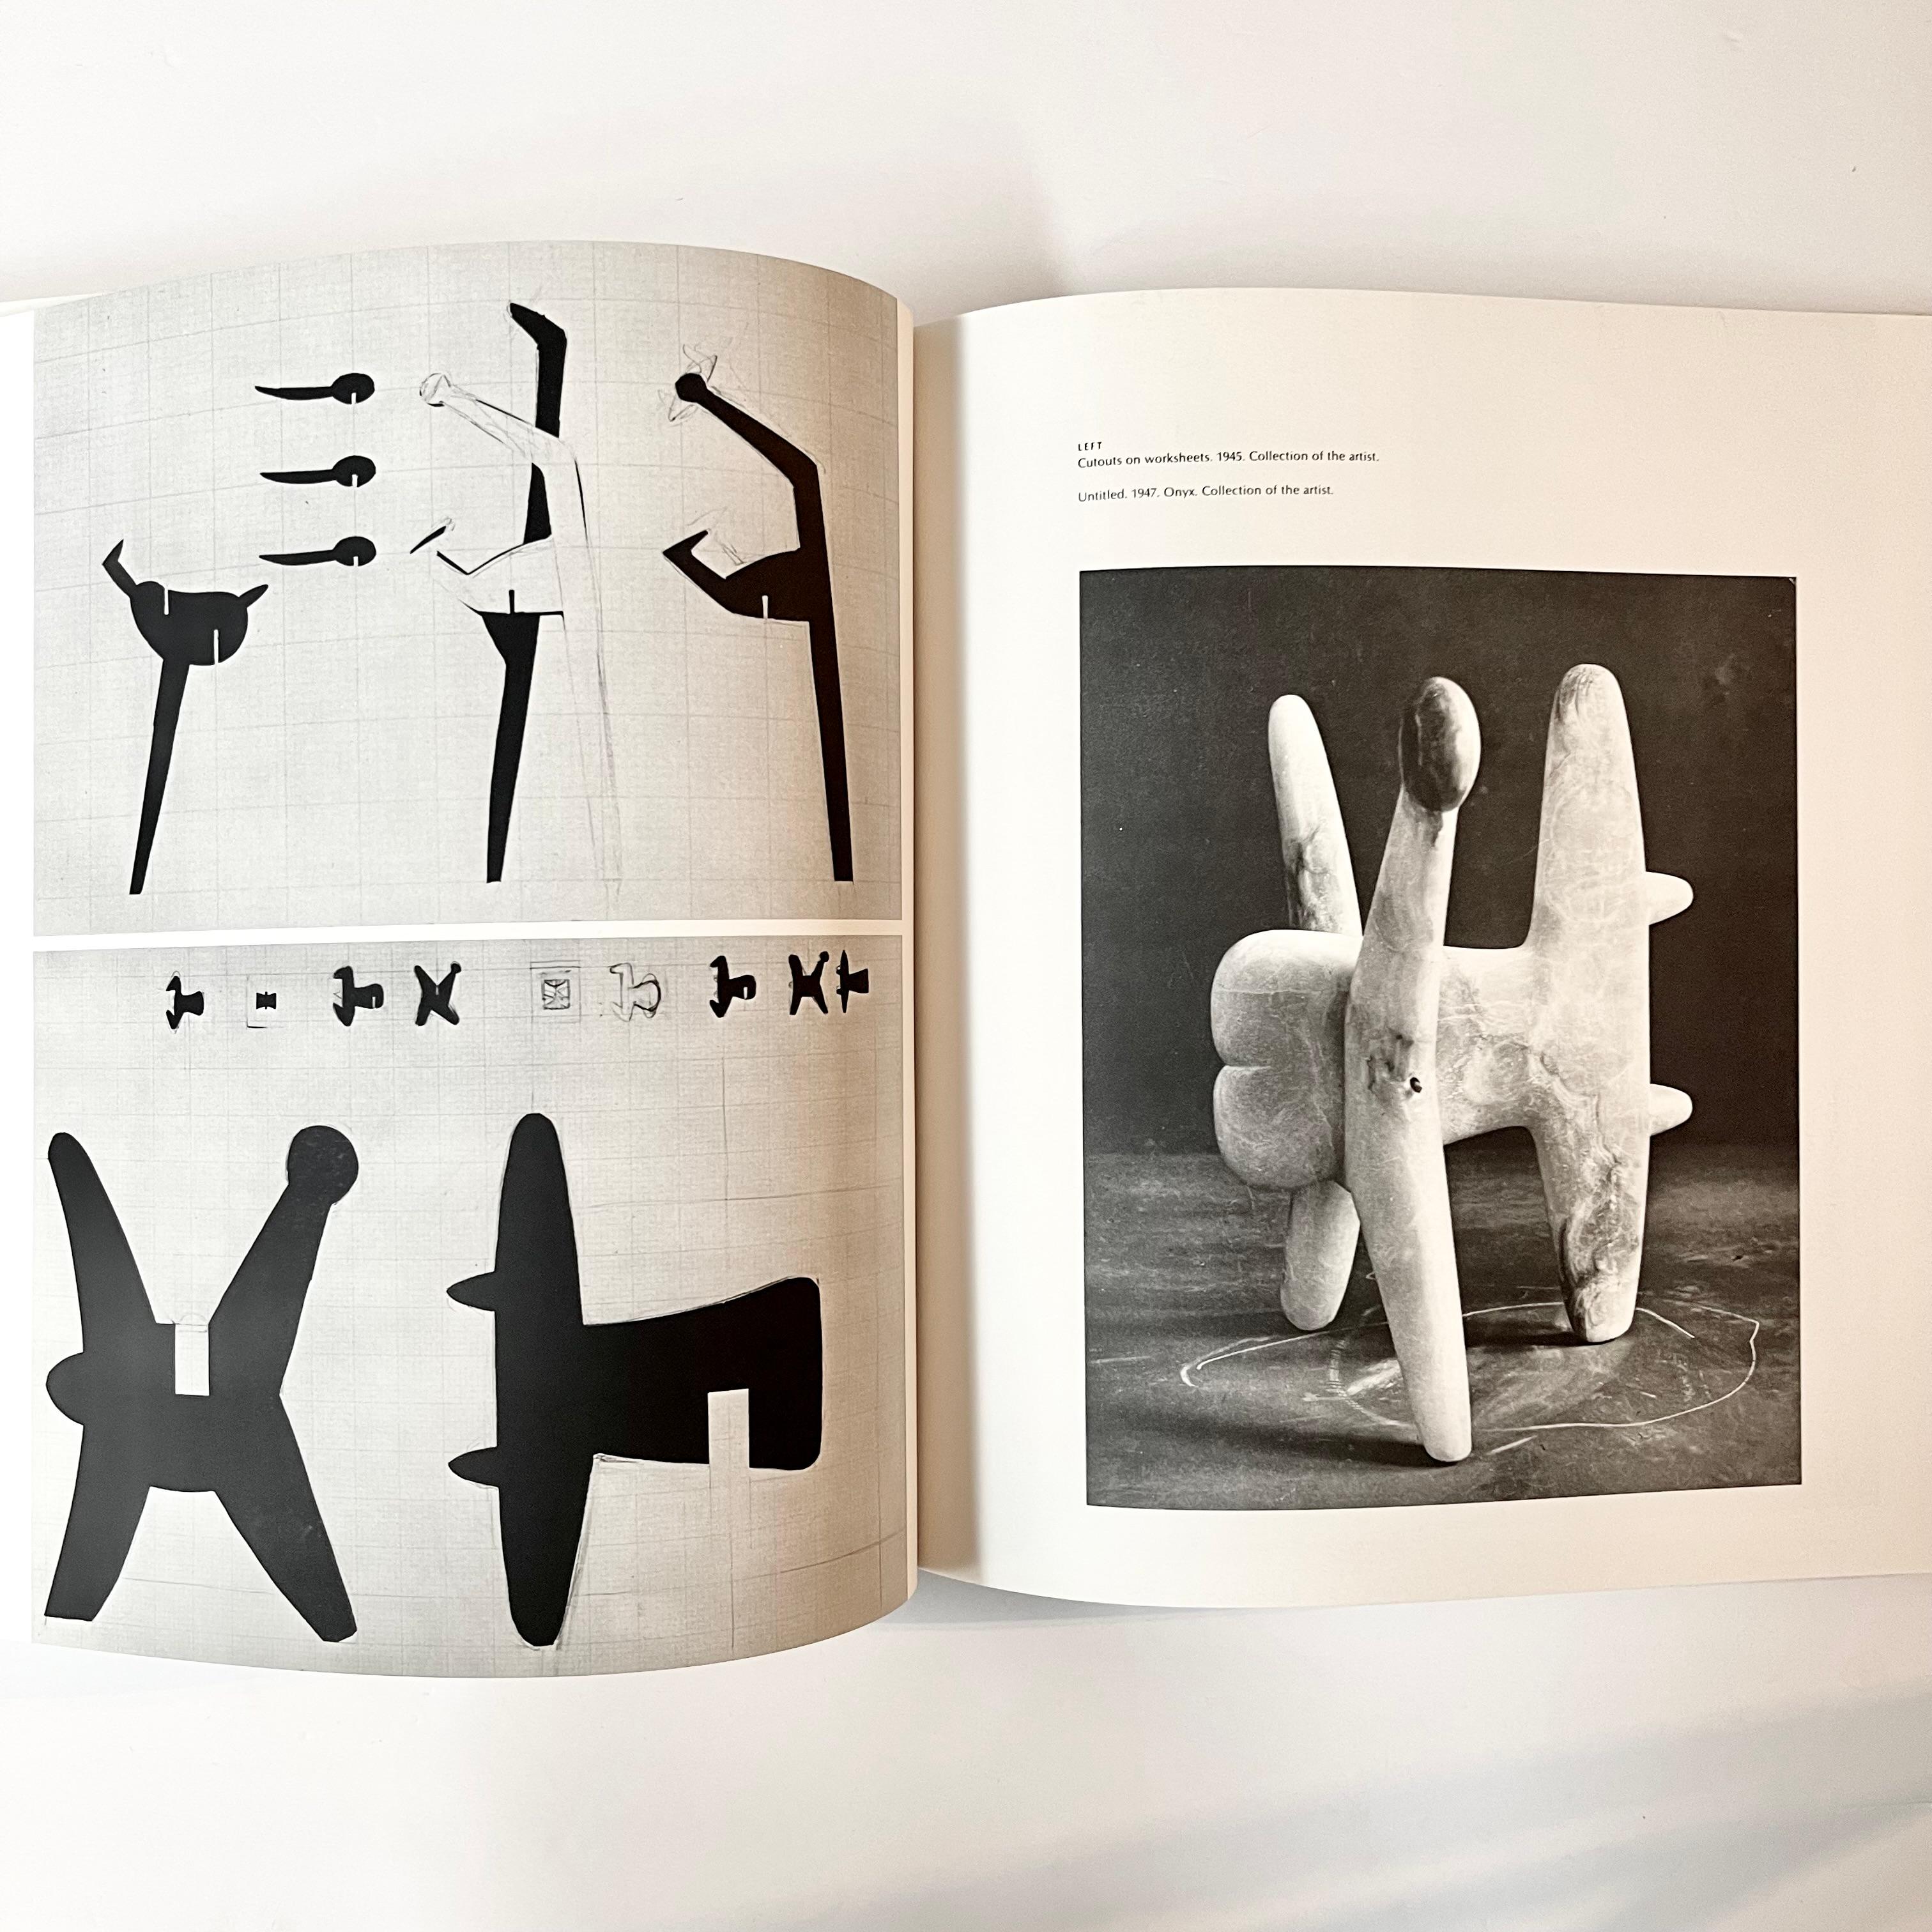 Paper Isamu Noguchi by Sam Hunter 1st Edition 1979